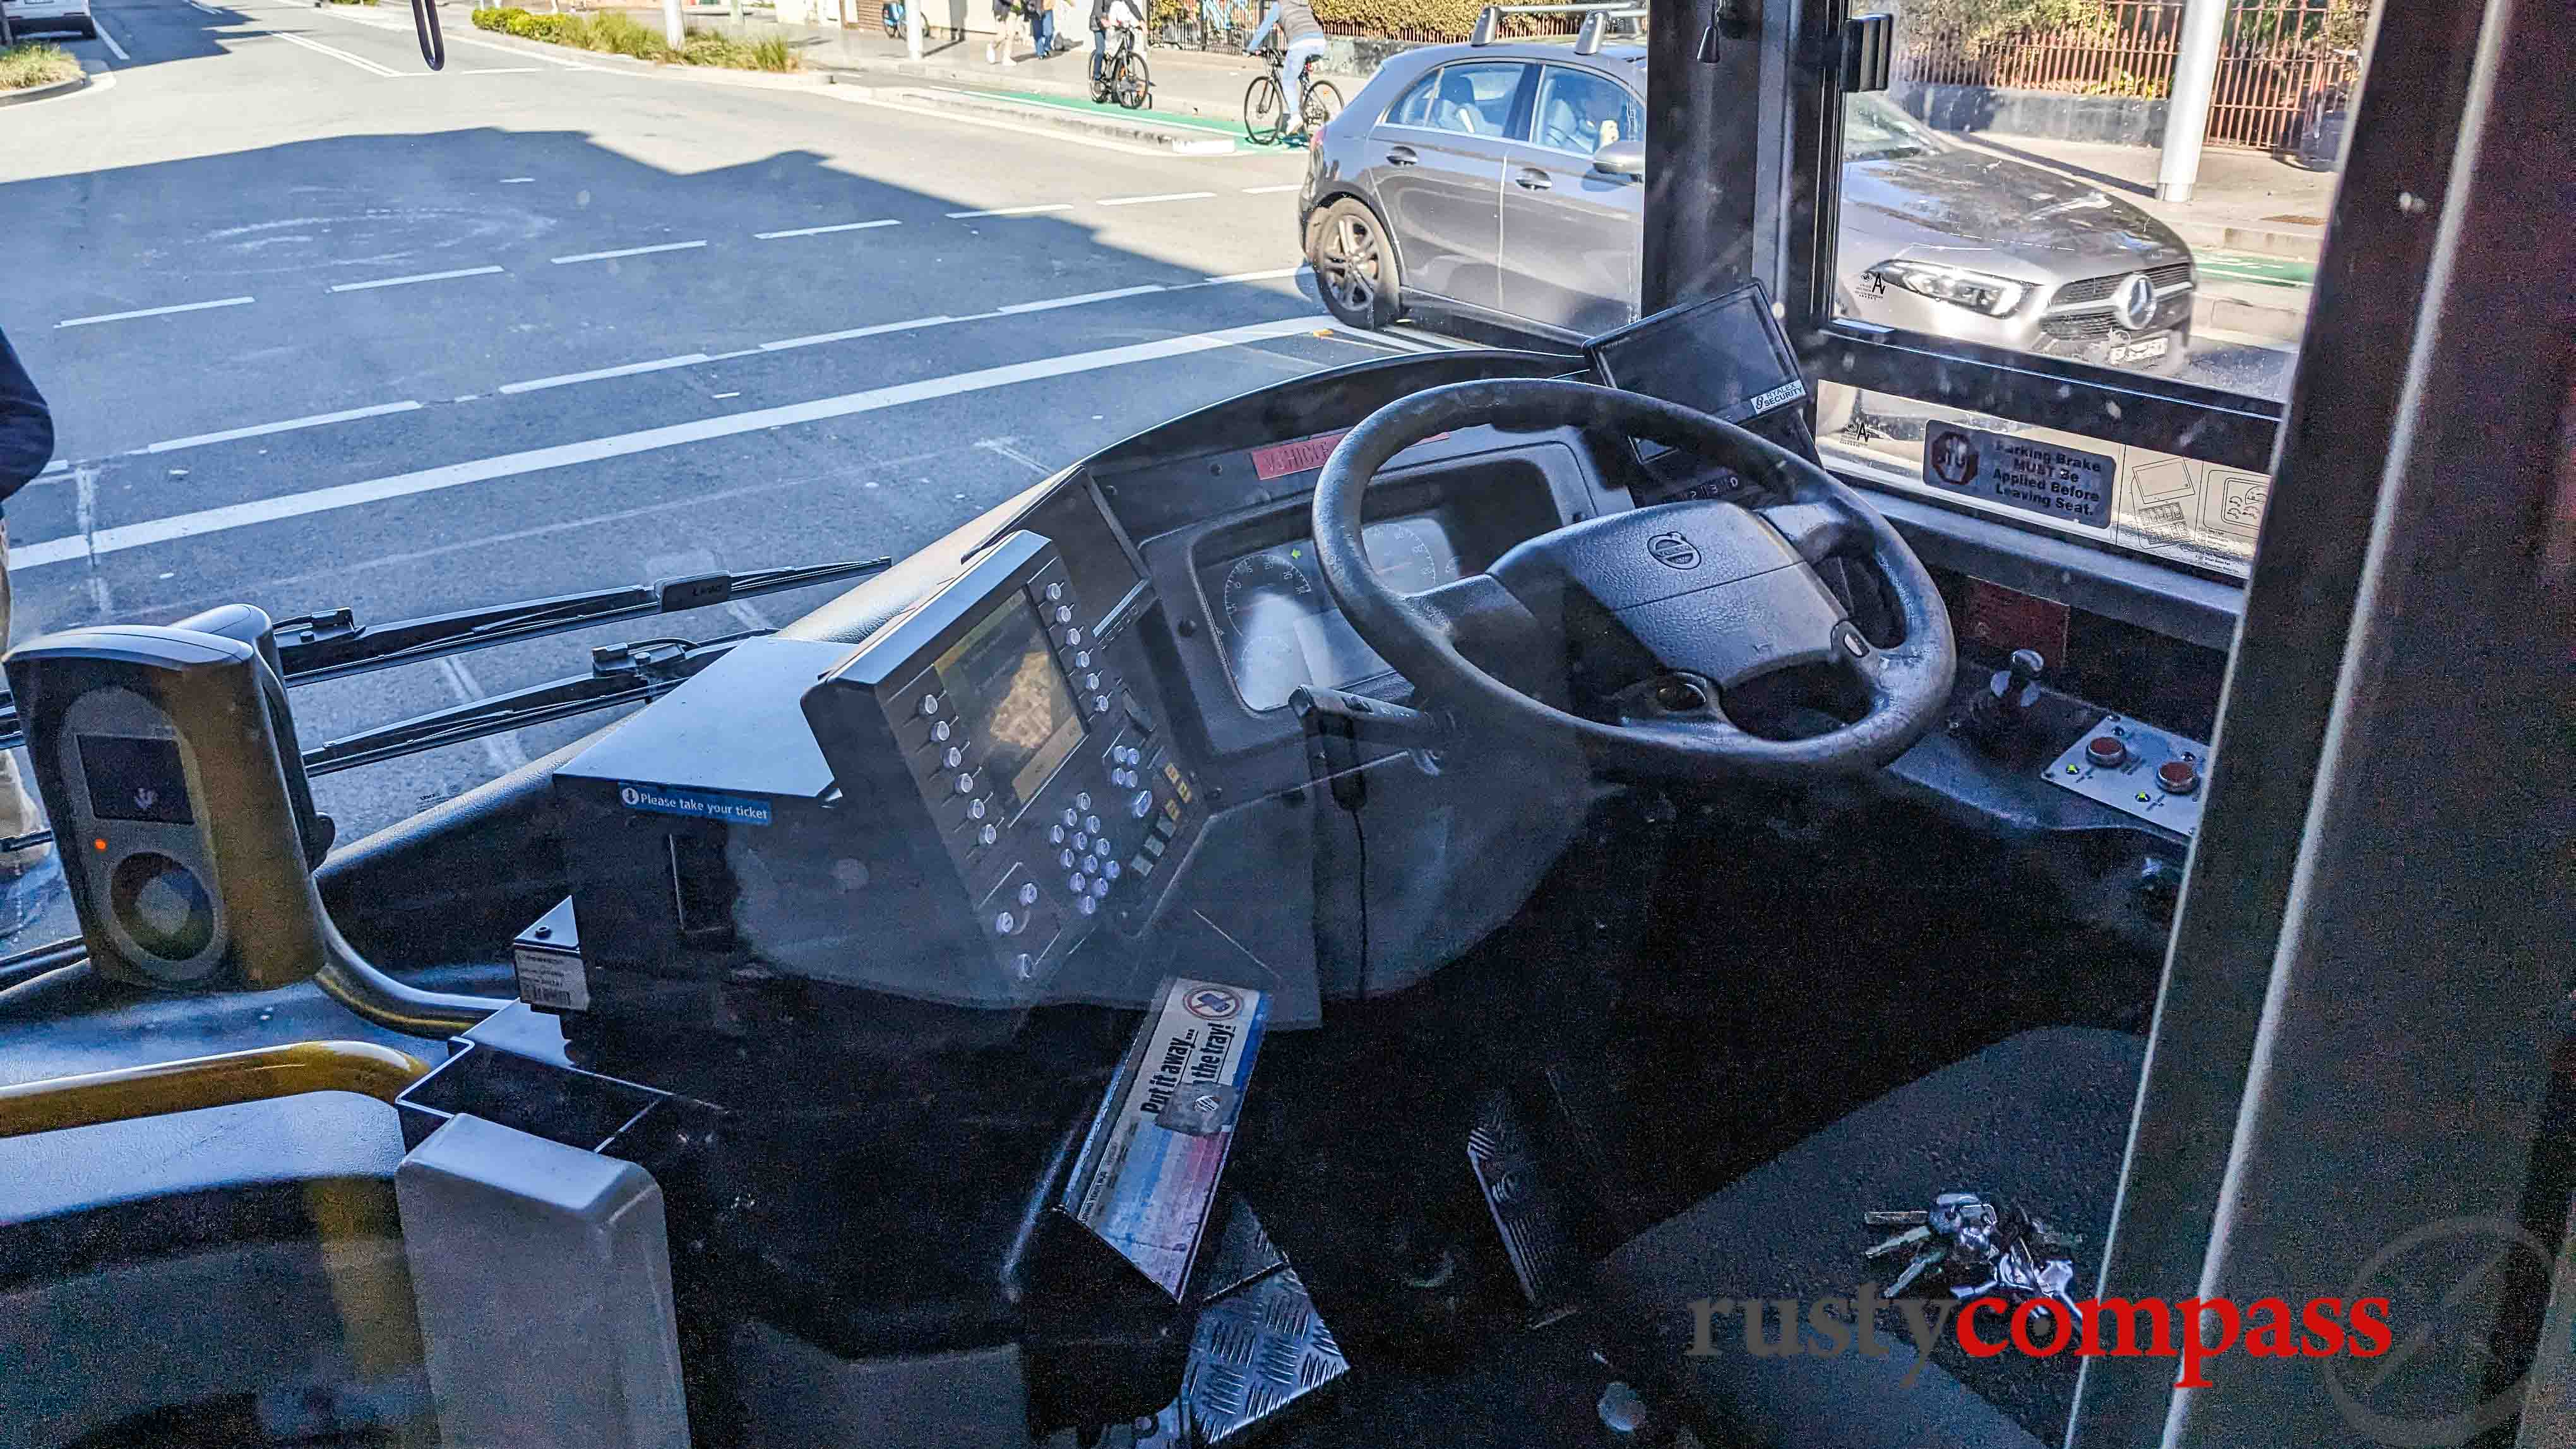 Sydney's driverless buses don't go anywhere....